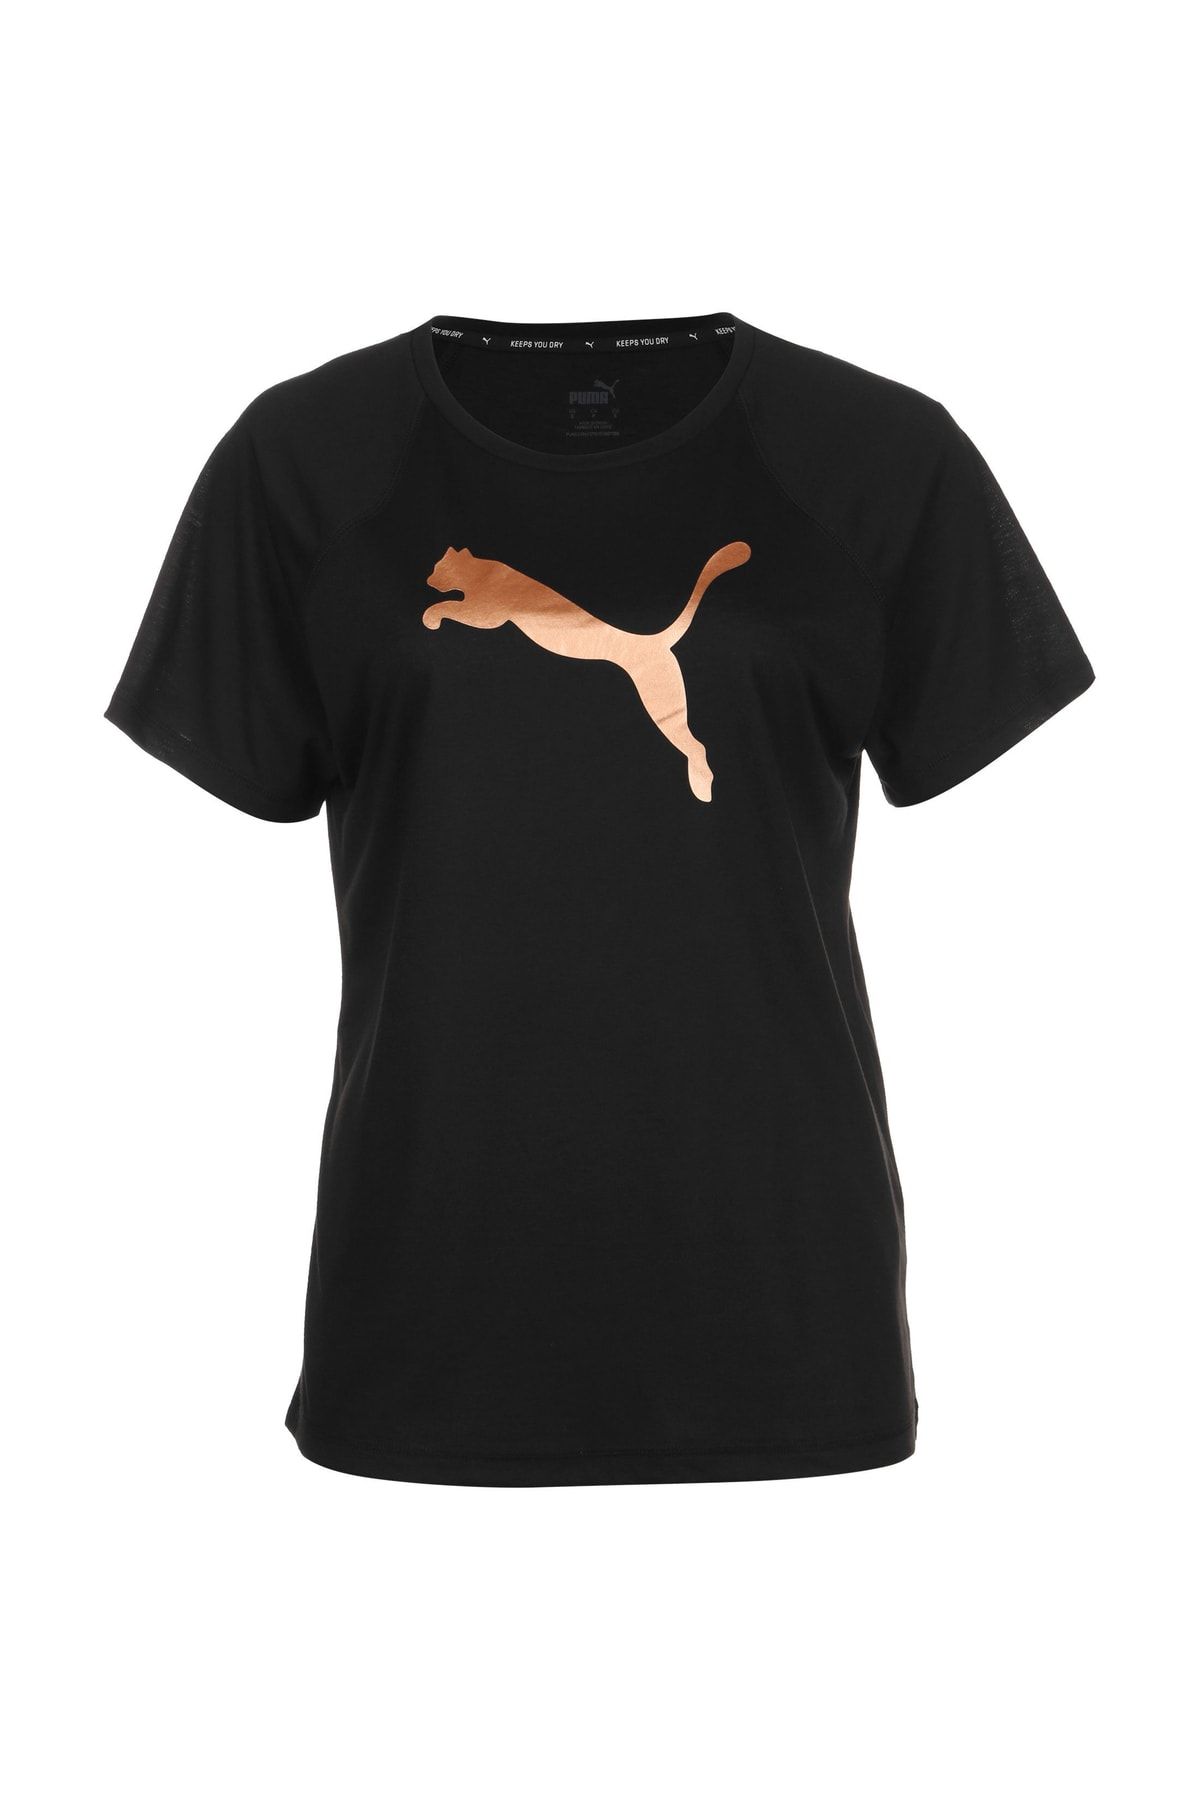 Puma Regular Trendyol Black T-Shirt fit - - -